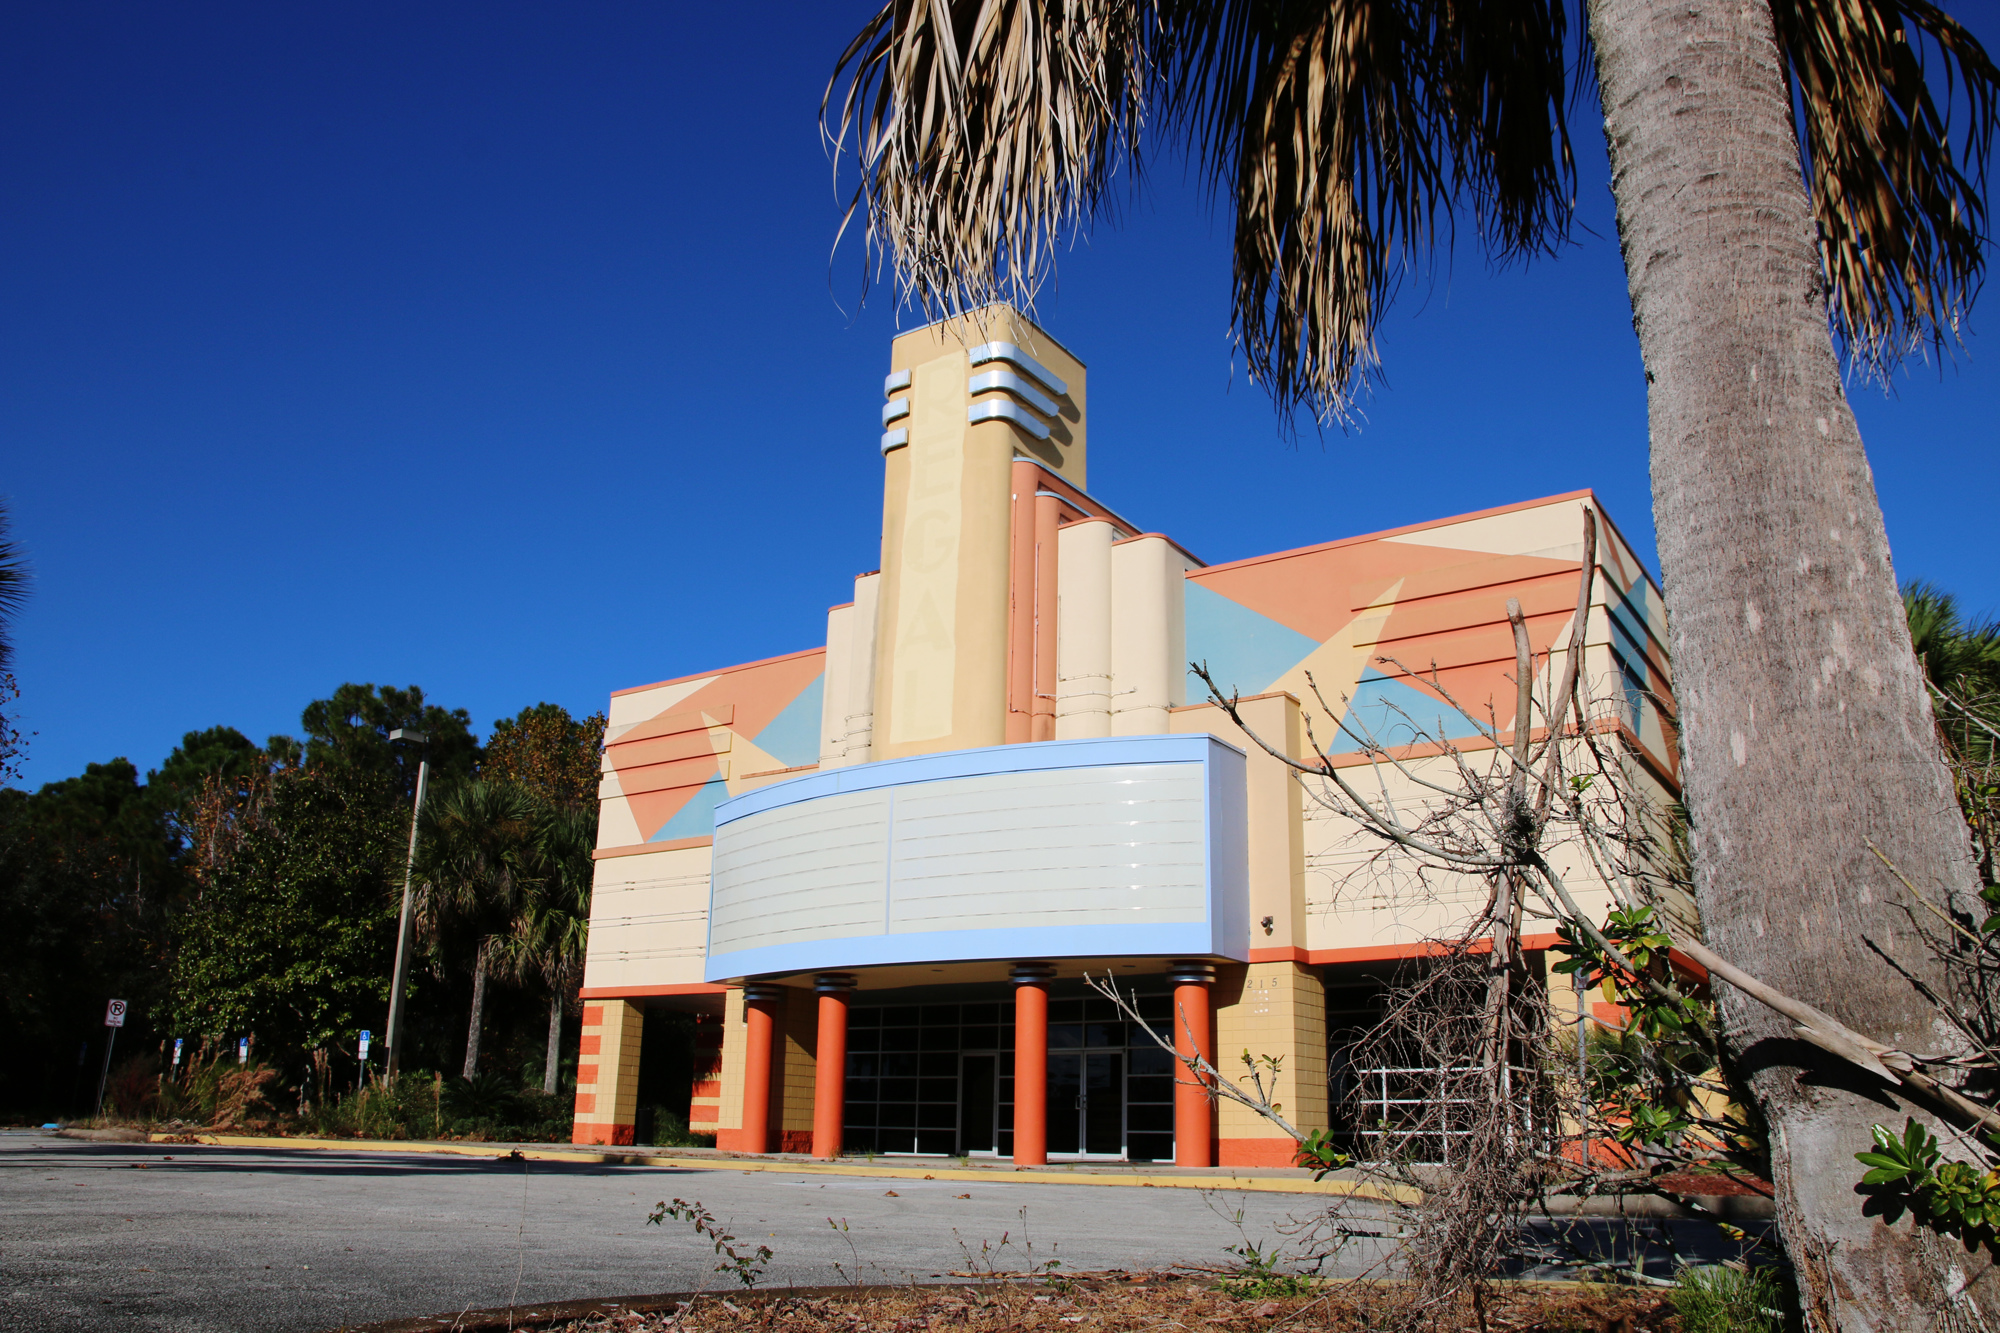 The Regal Cinemas at 215 Williamson Blvd. has been closed since 2020. Photo by Jarleene Almenas